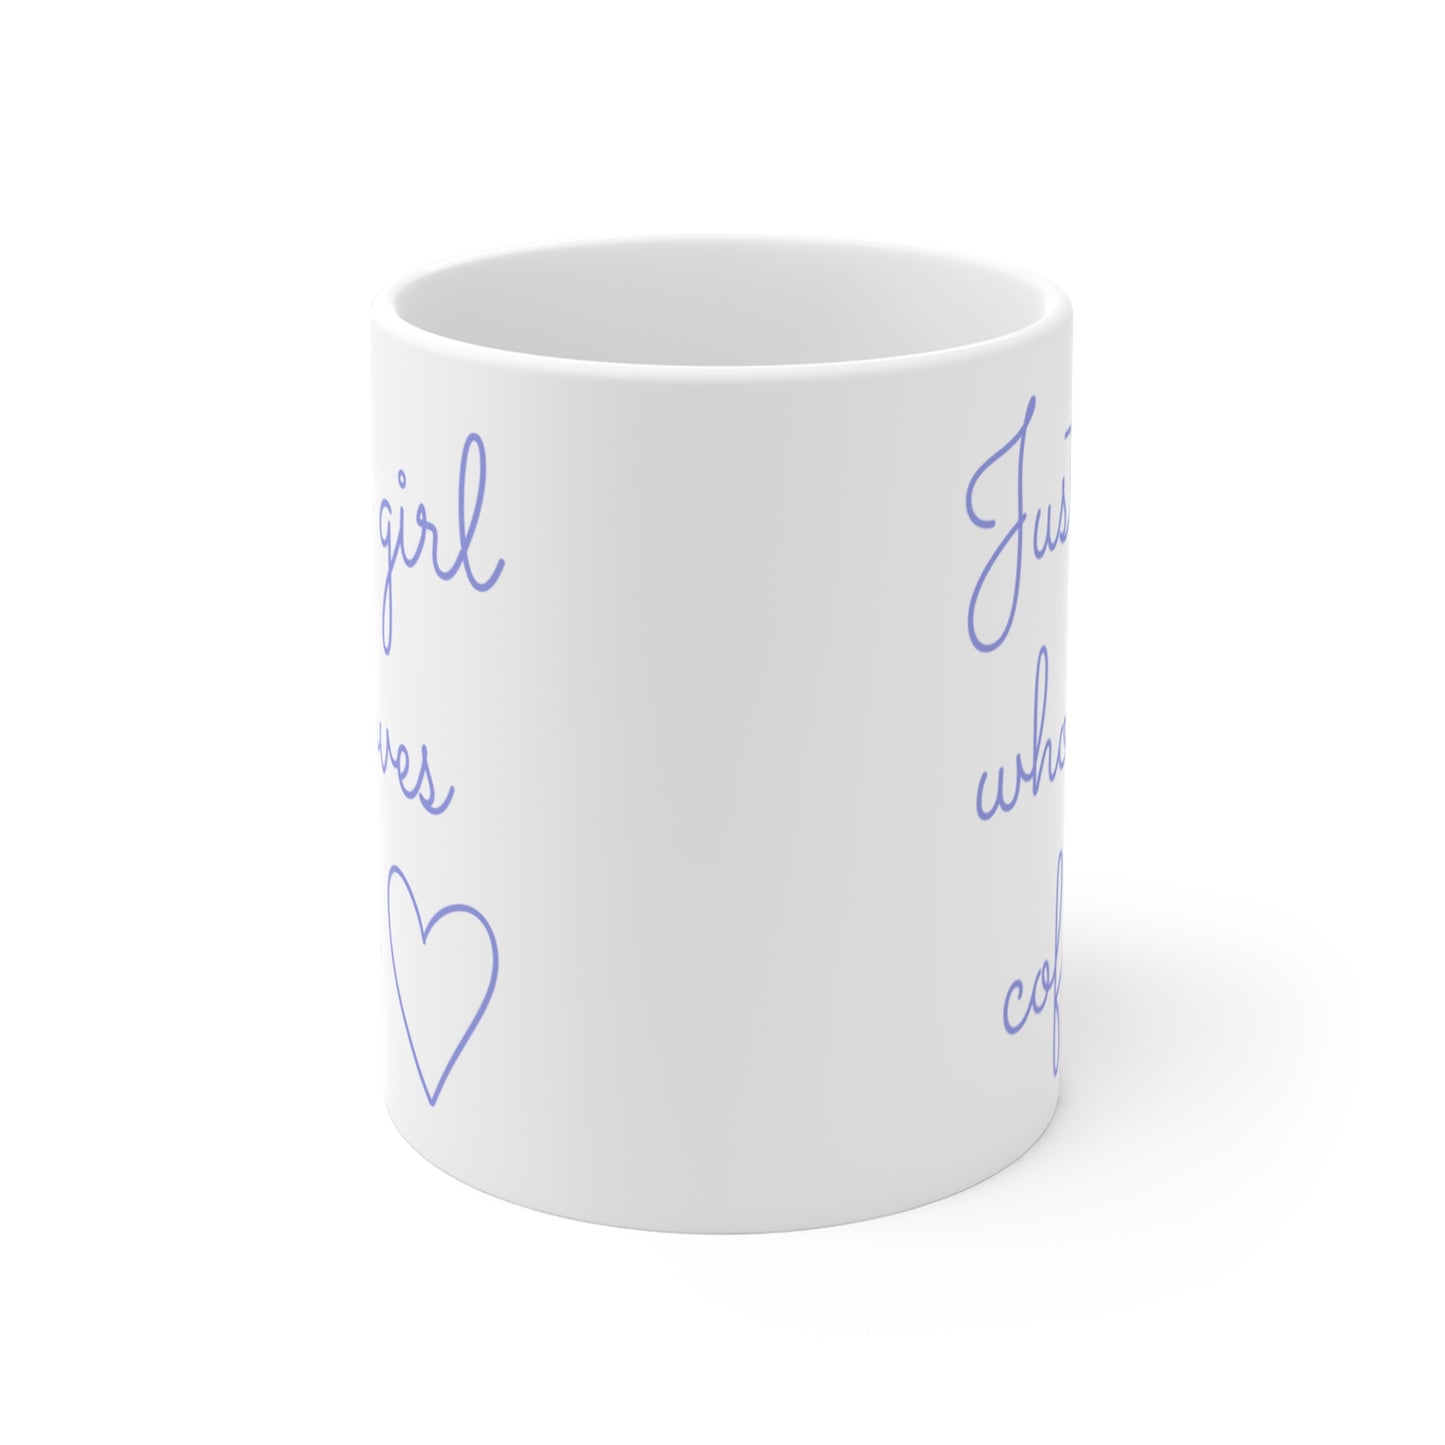 Just A Girl Who Loves Coffee Mug